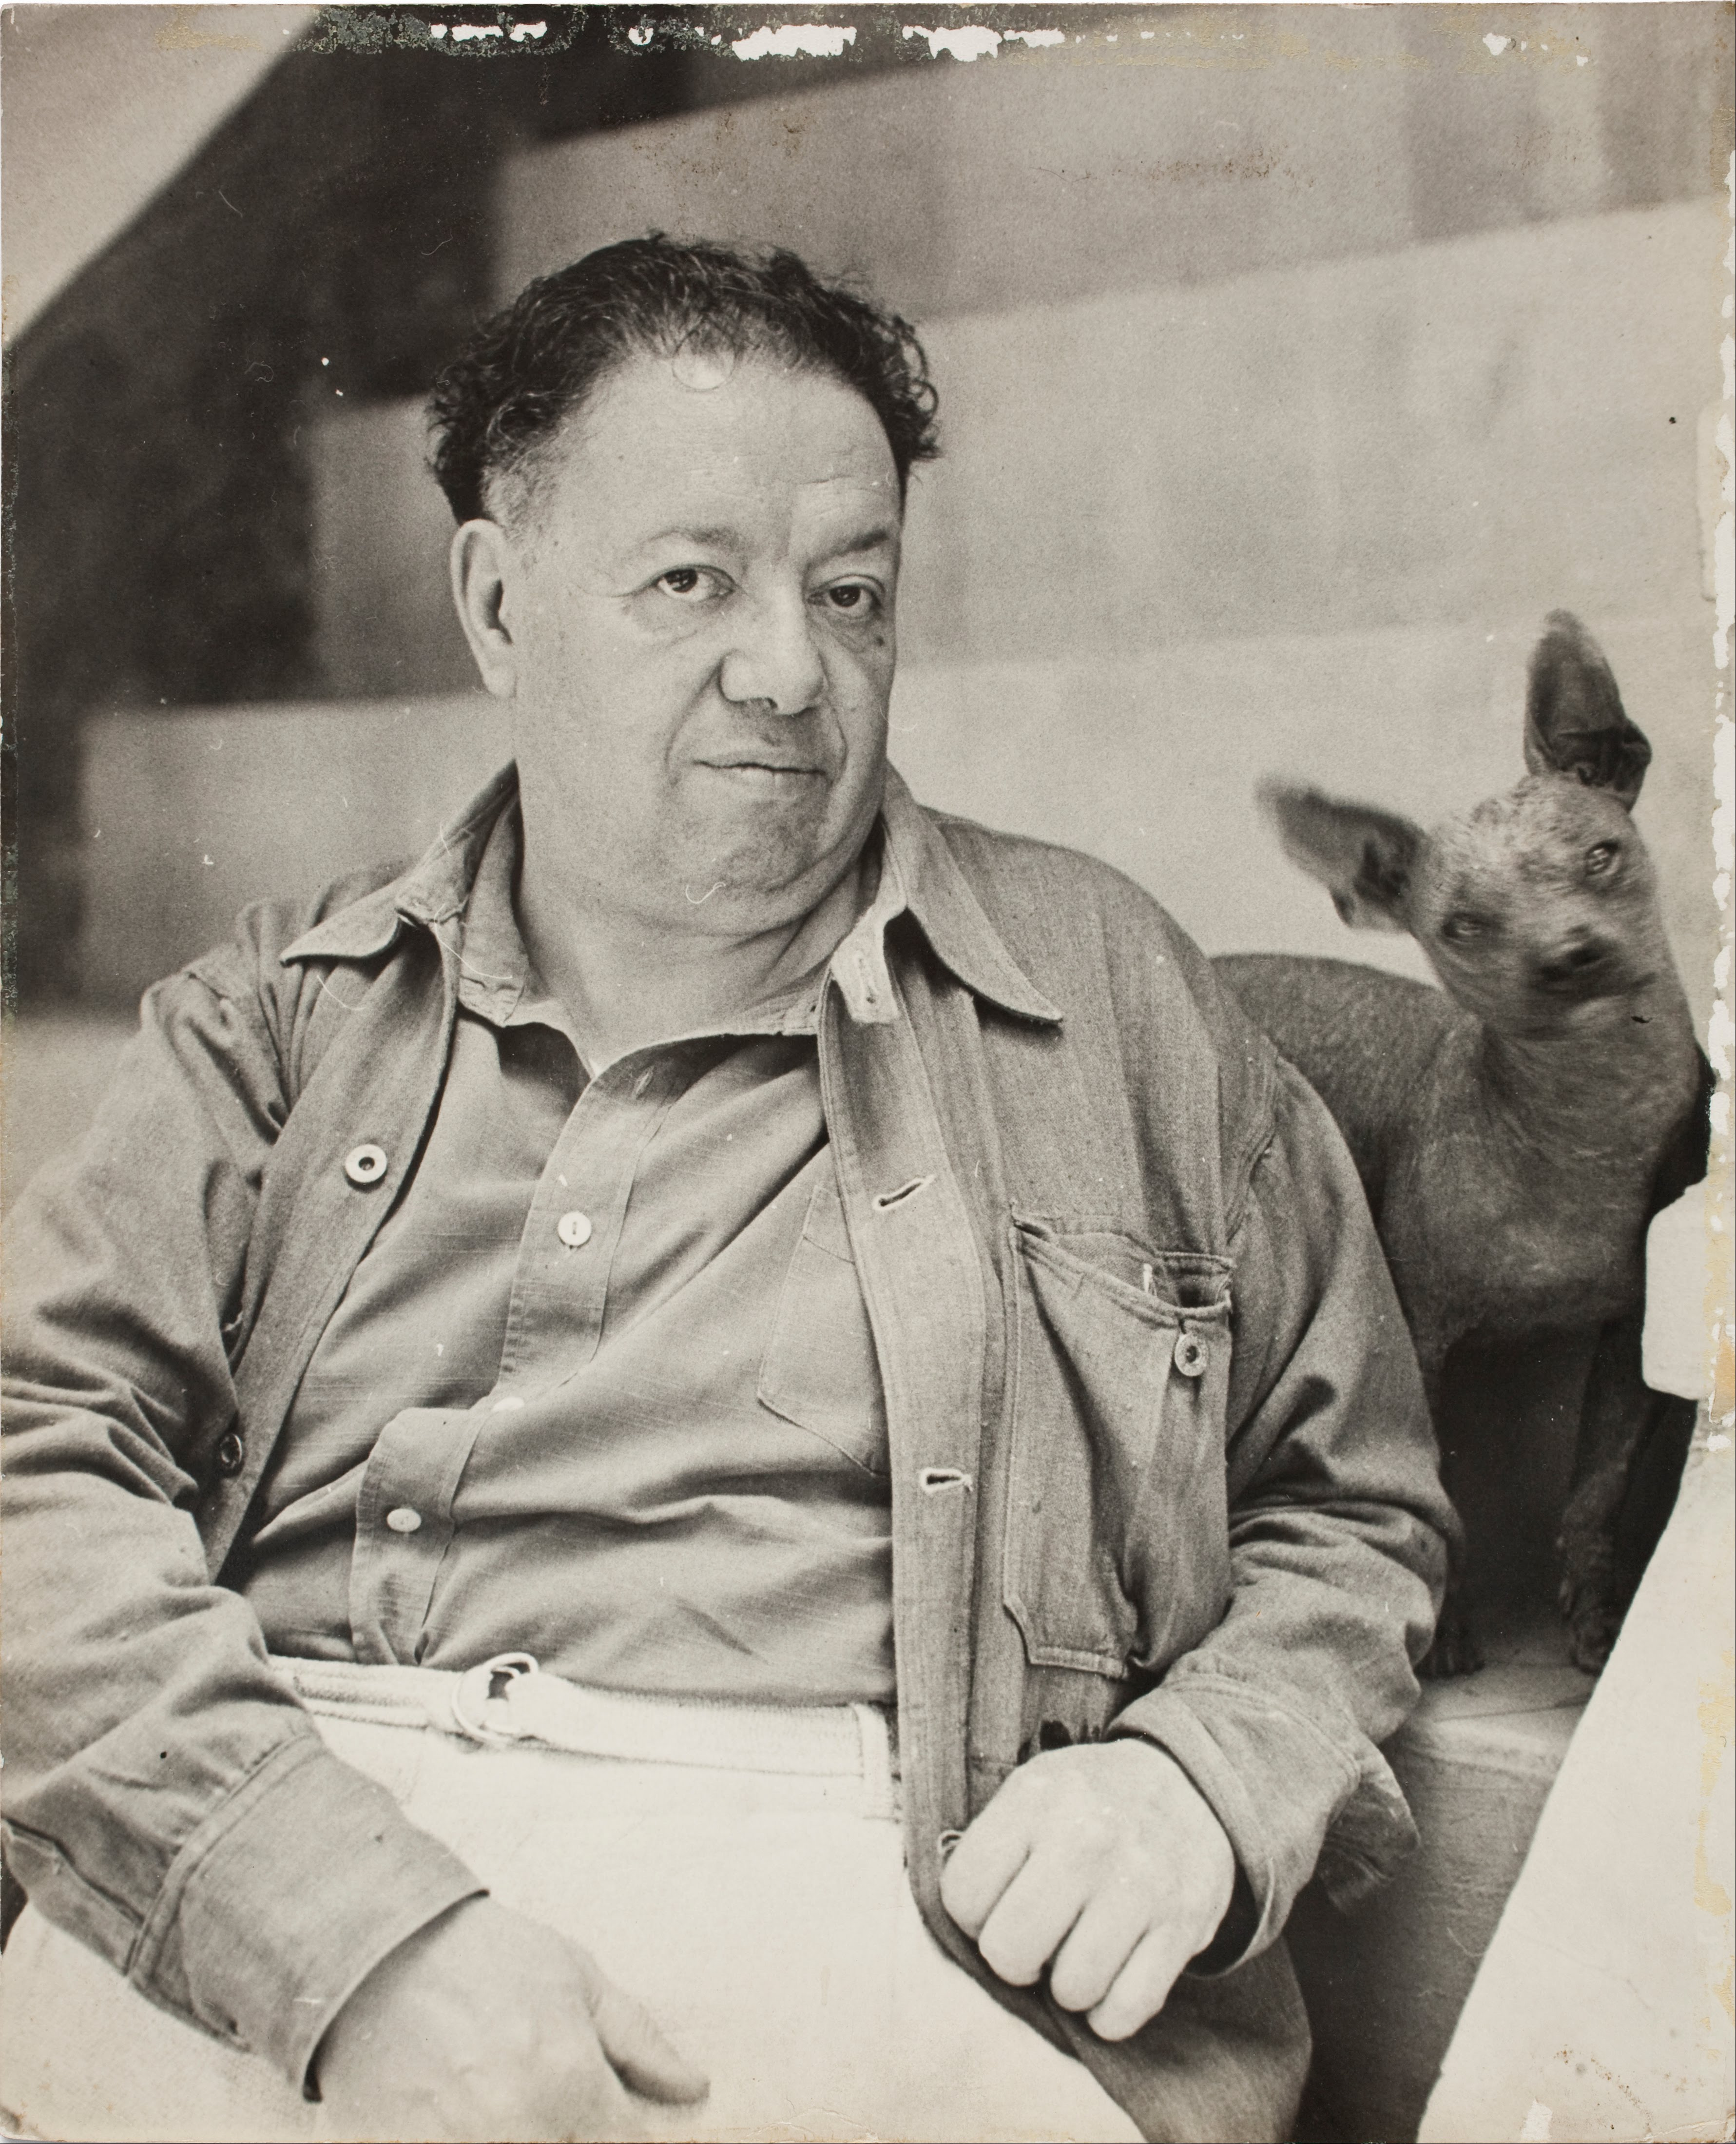 Diego Rivera - December 8, 1886 - November 24, 1957